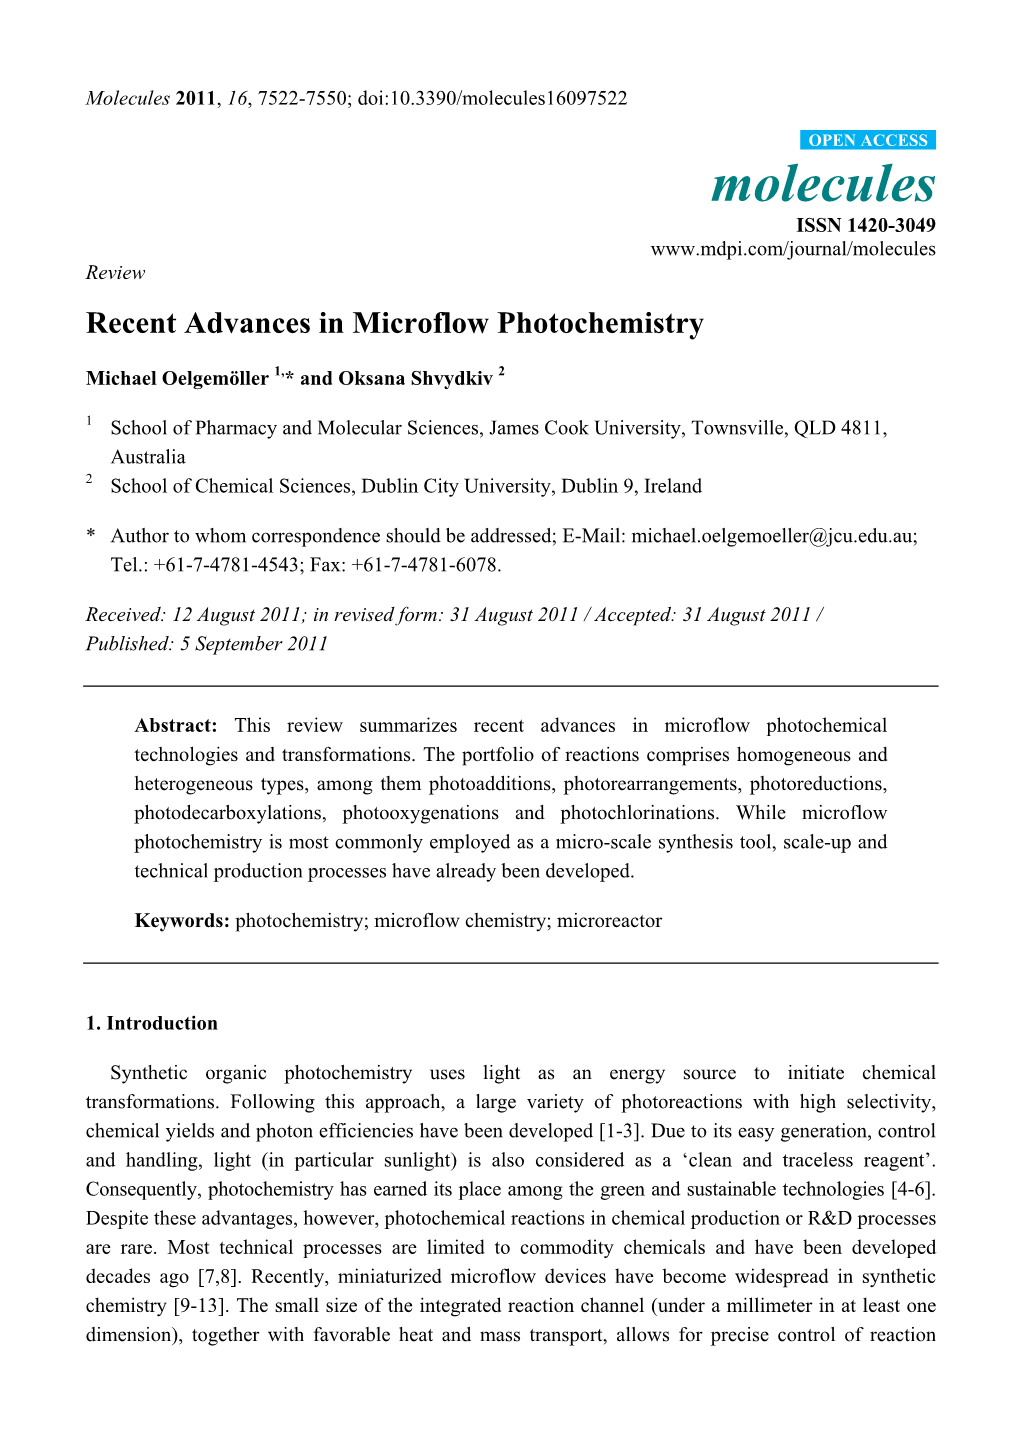 Recent Advances in Microflow Photochemistry